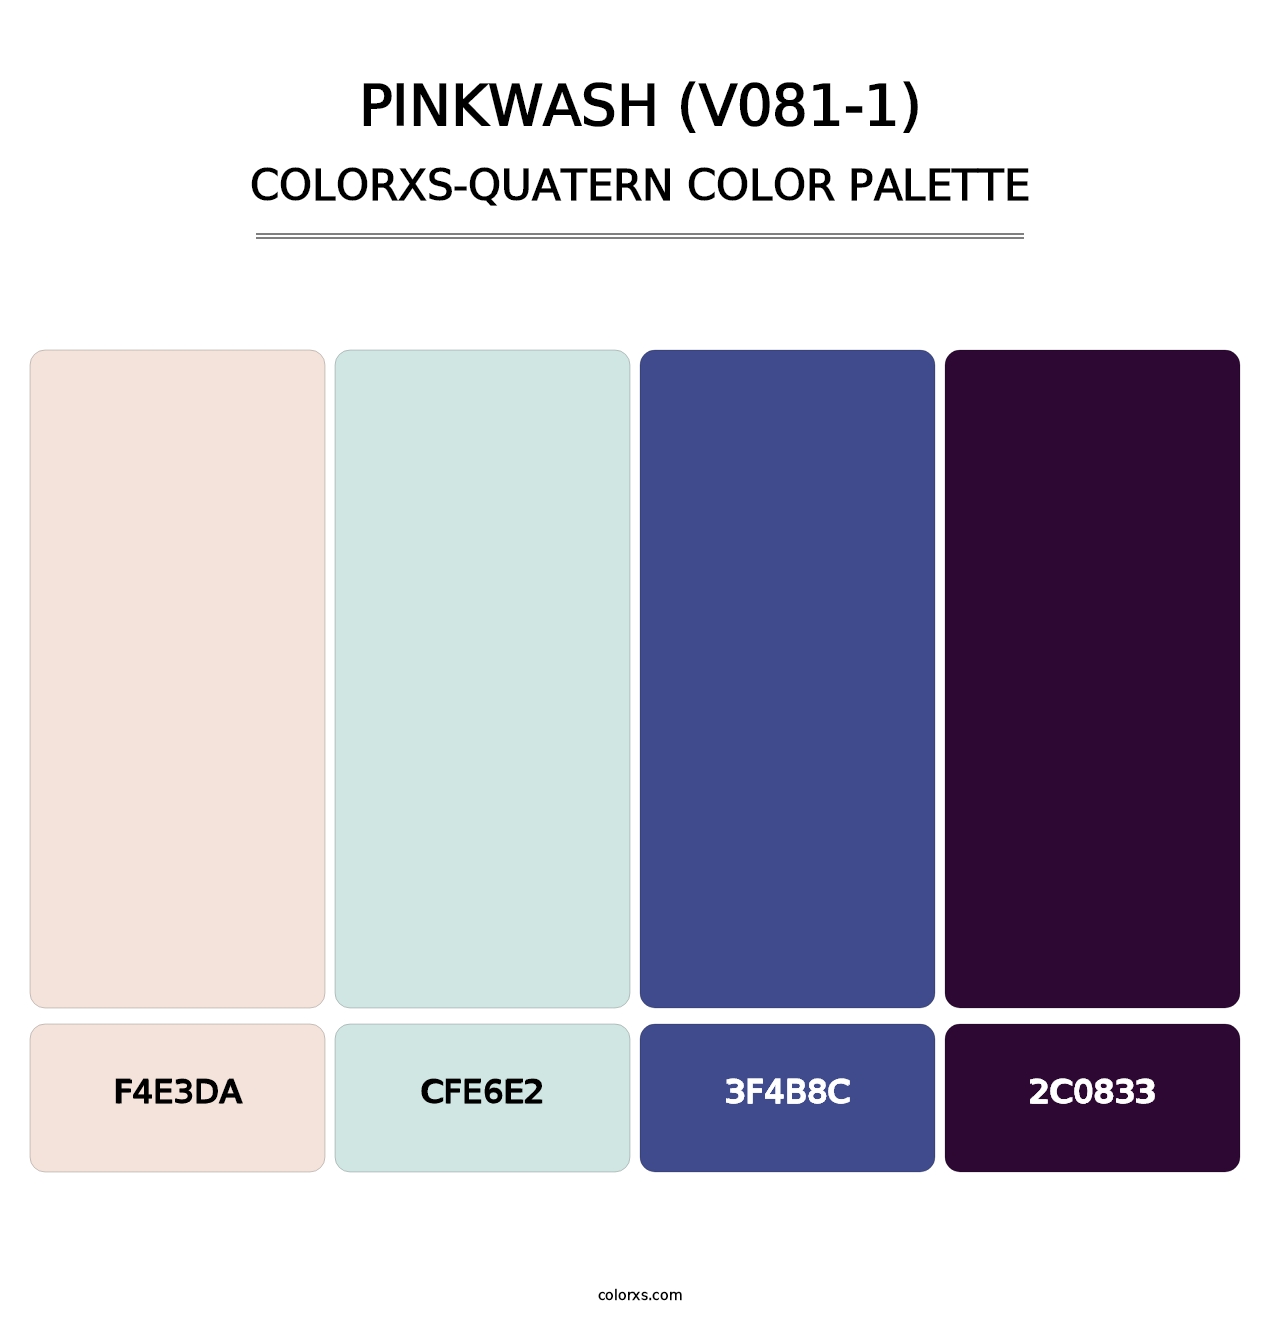 Pinkwash (V081-1) - Colorxs Quatern Palette